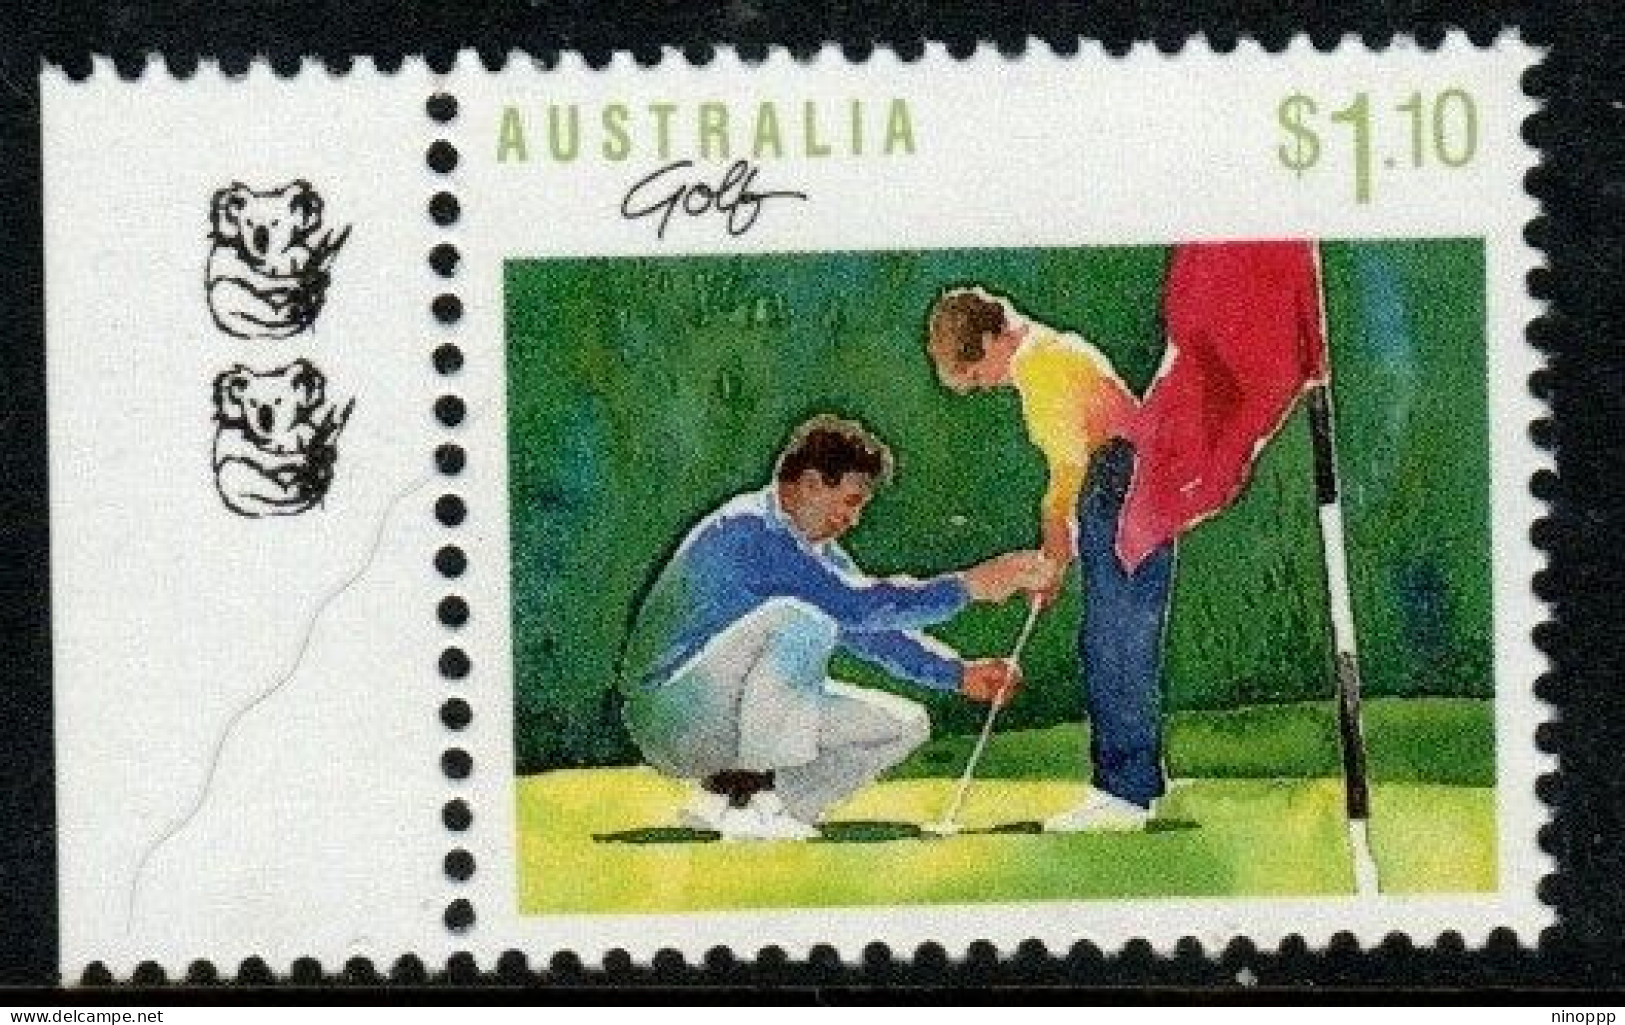 Australia Cat 1188a 1989 Sports $ 1.10 Golf, 2 Koalas Reprint,mint Never Hinged - Proofs & Reprints